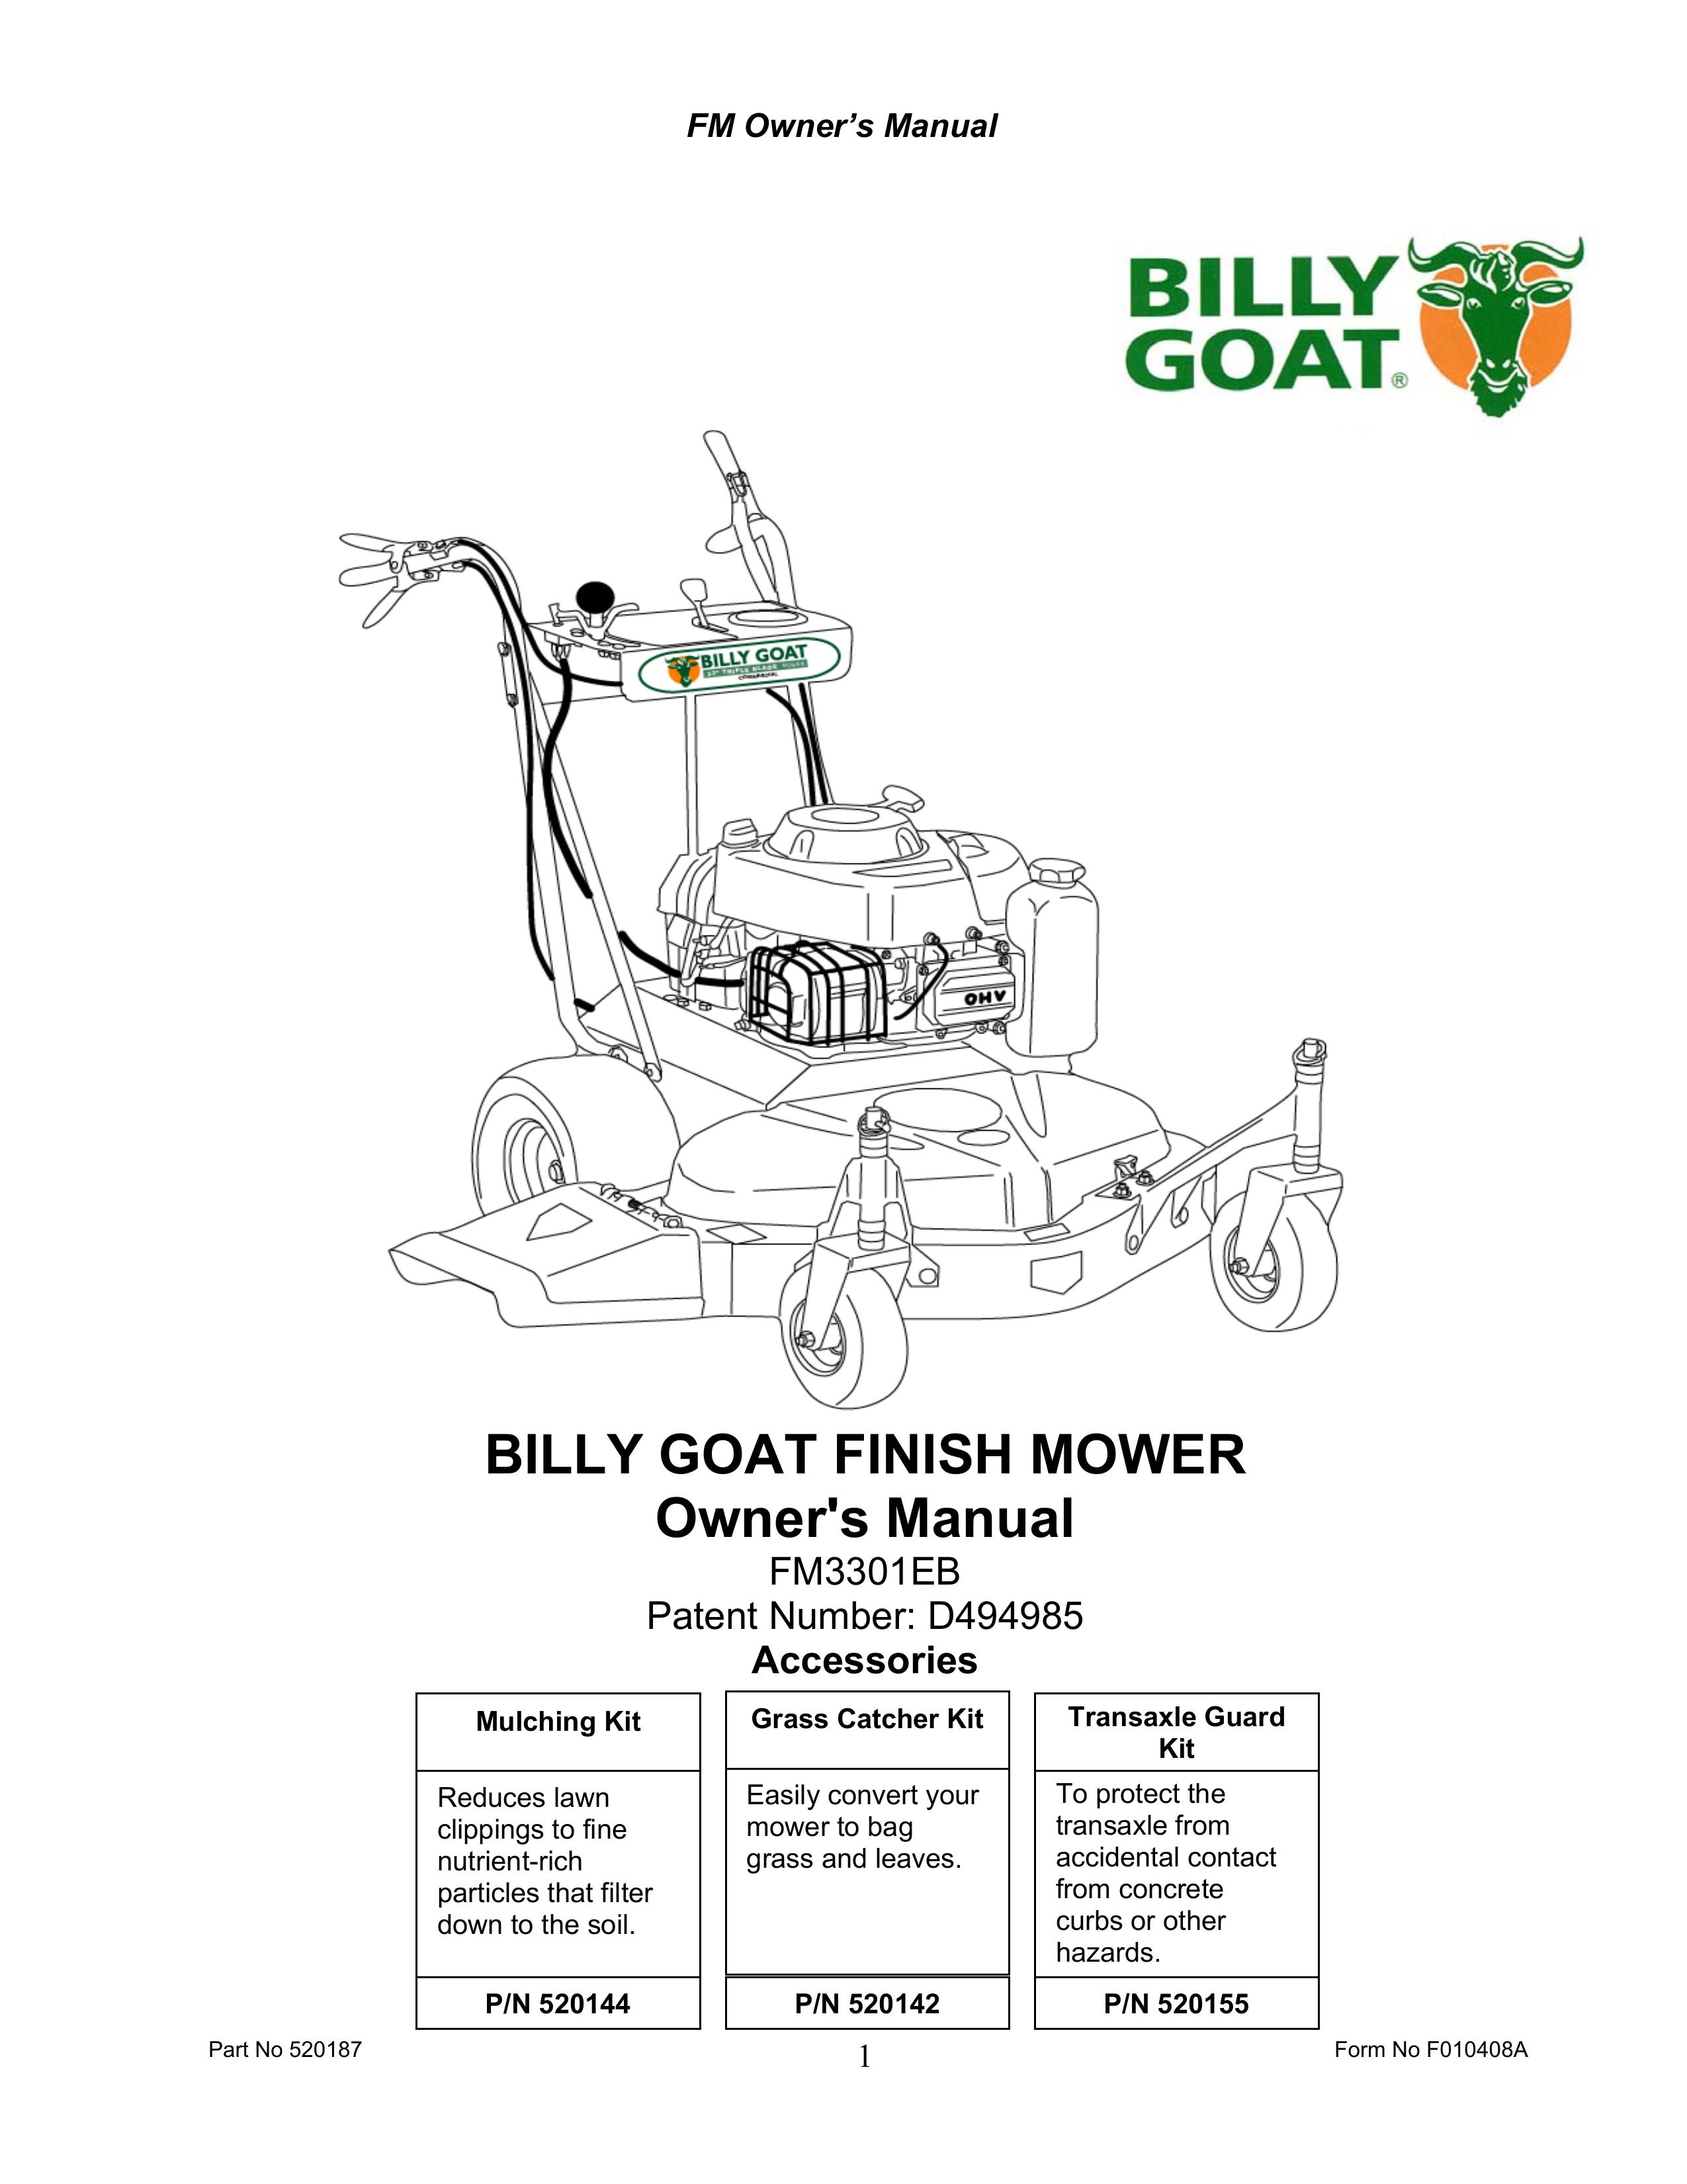 Billy Goat FM3301EB Lawn Mower User Manual